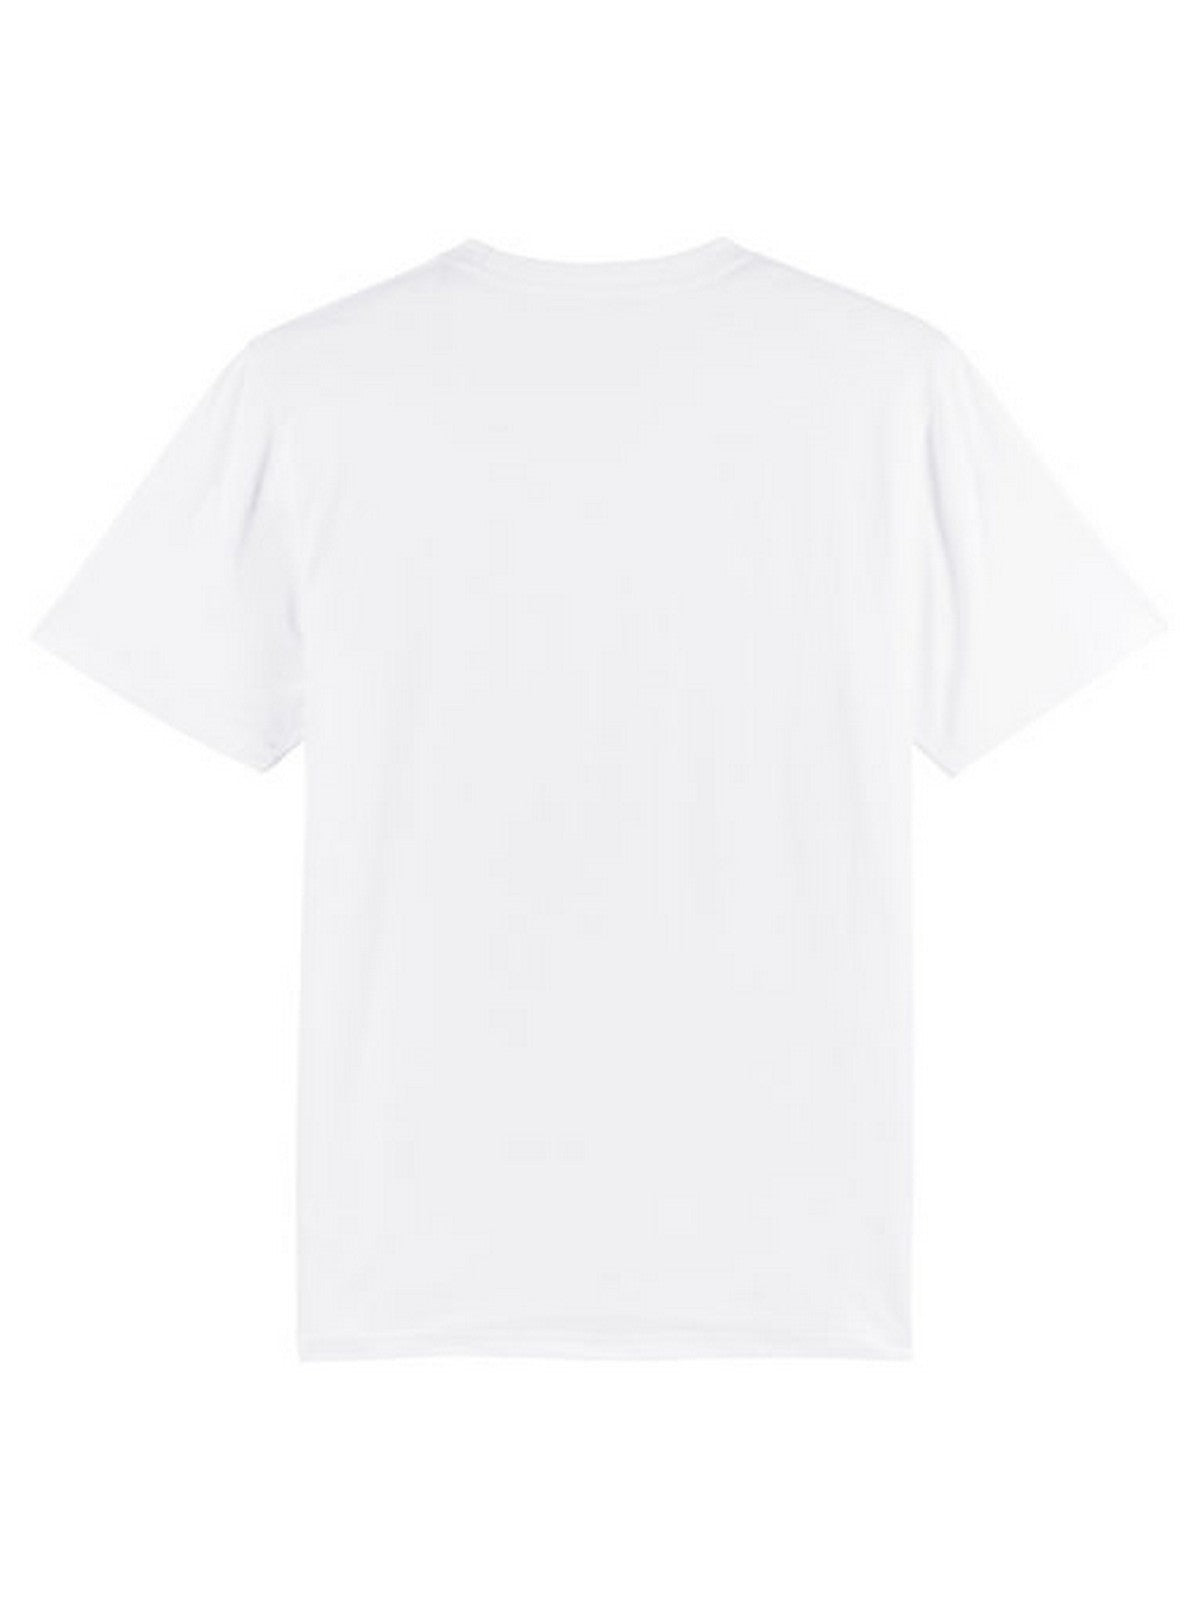 BARON FILOU T-Shirt e Polo Uomo  T-SHIRT FILOU LX Bianco